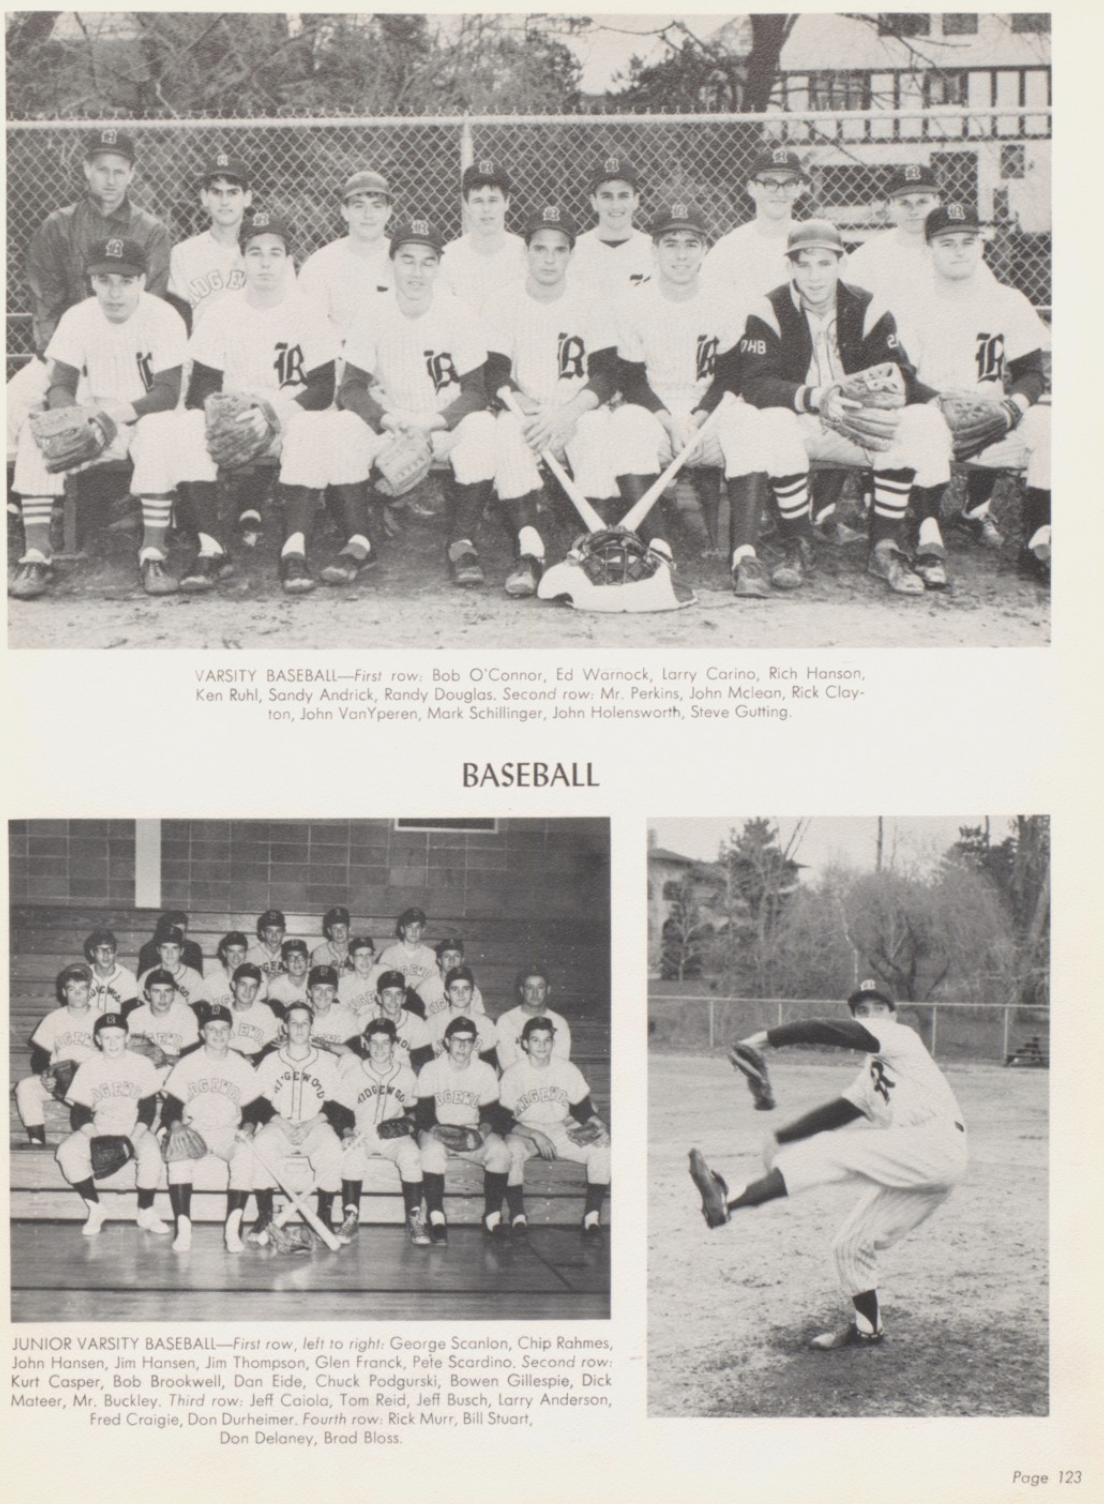 1967 Boys’ Baseball Team